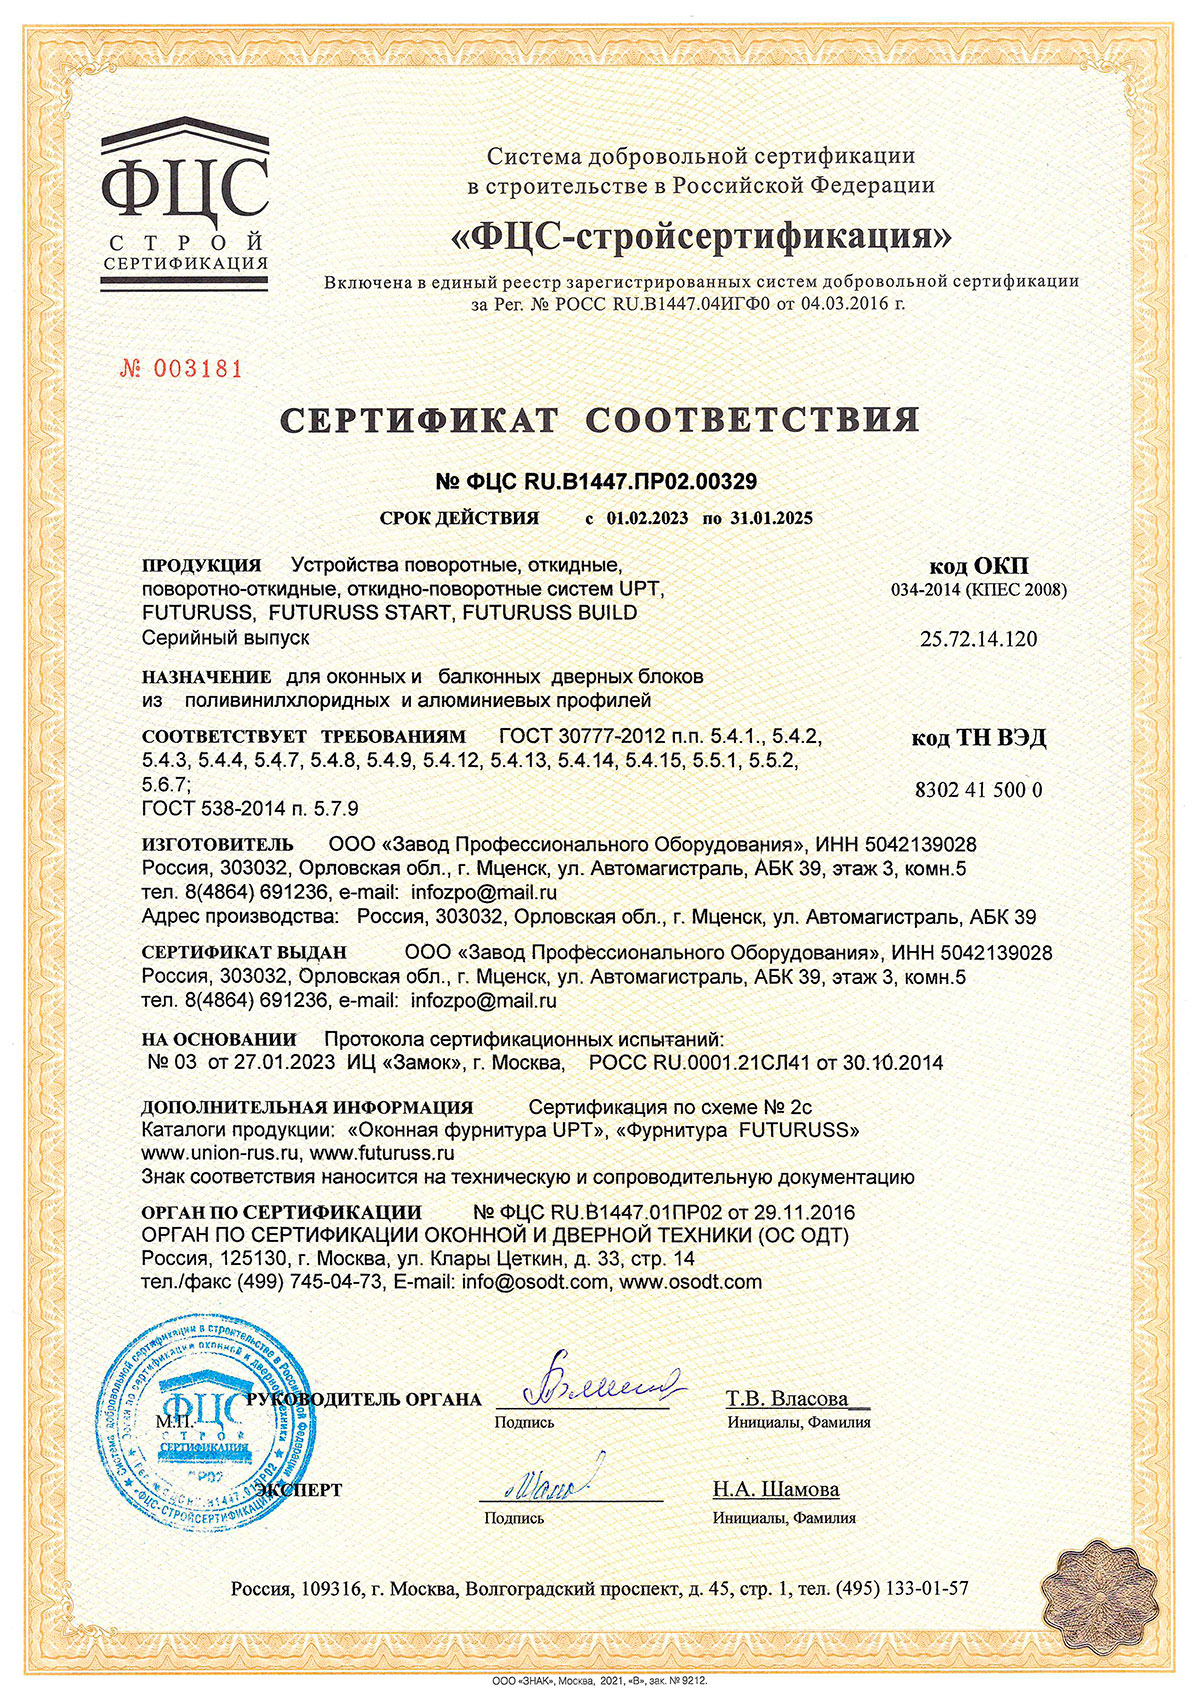 Futuruss, сертификат соответствия, 31.01.2025